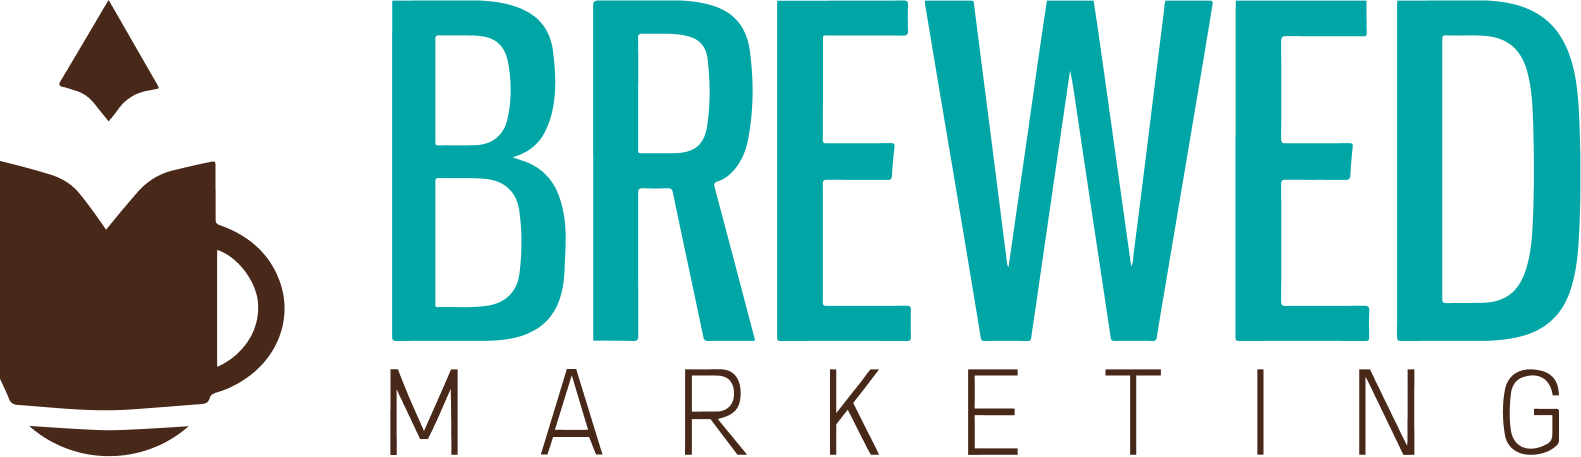 Brewed Marketing Logo